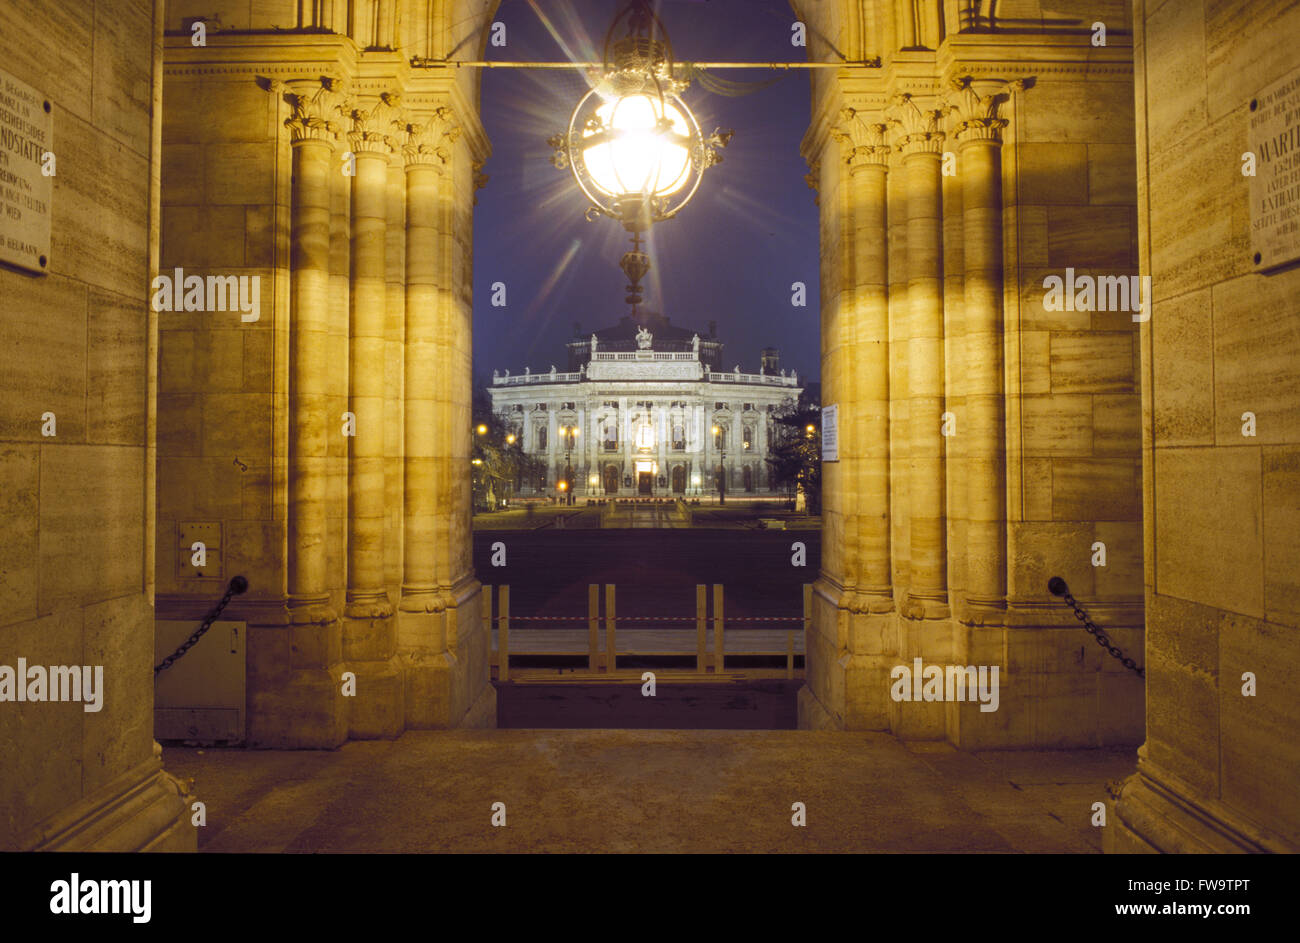 AUT, Austria, Vienna, il Burgtheater, vista dall'entrata del municipio AUT, Oesterreich, Wien, das Burgtheater, Blick vom Rat Foto Stock